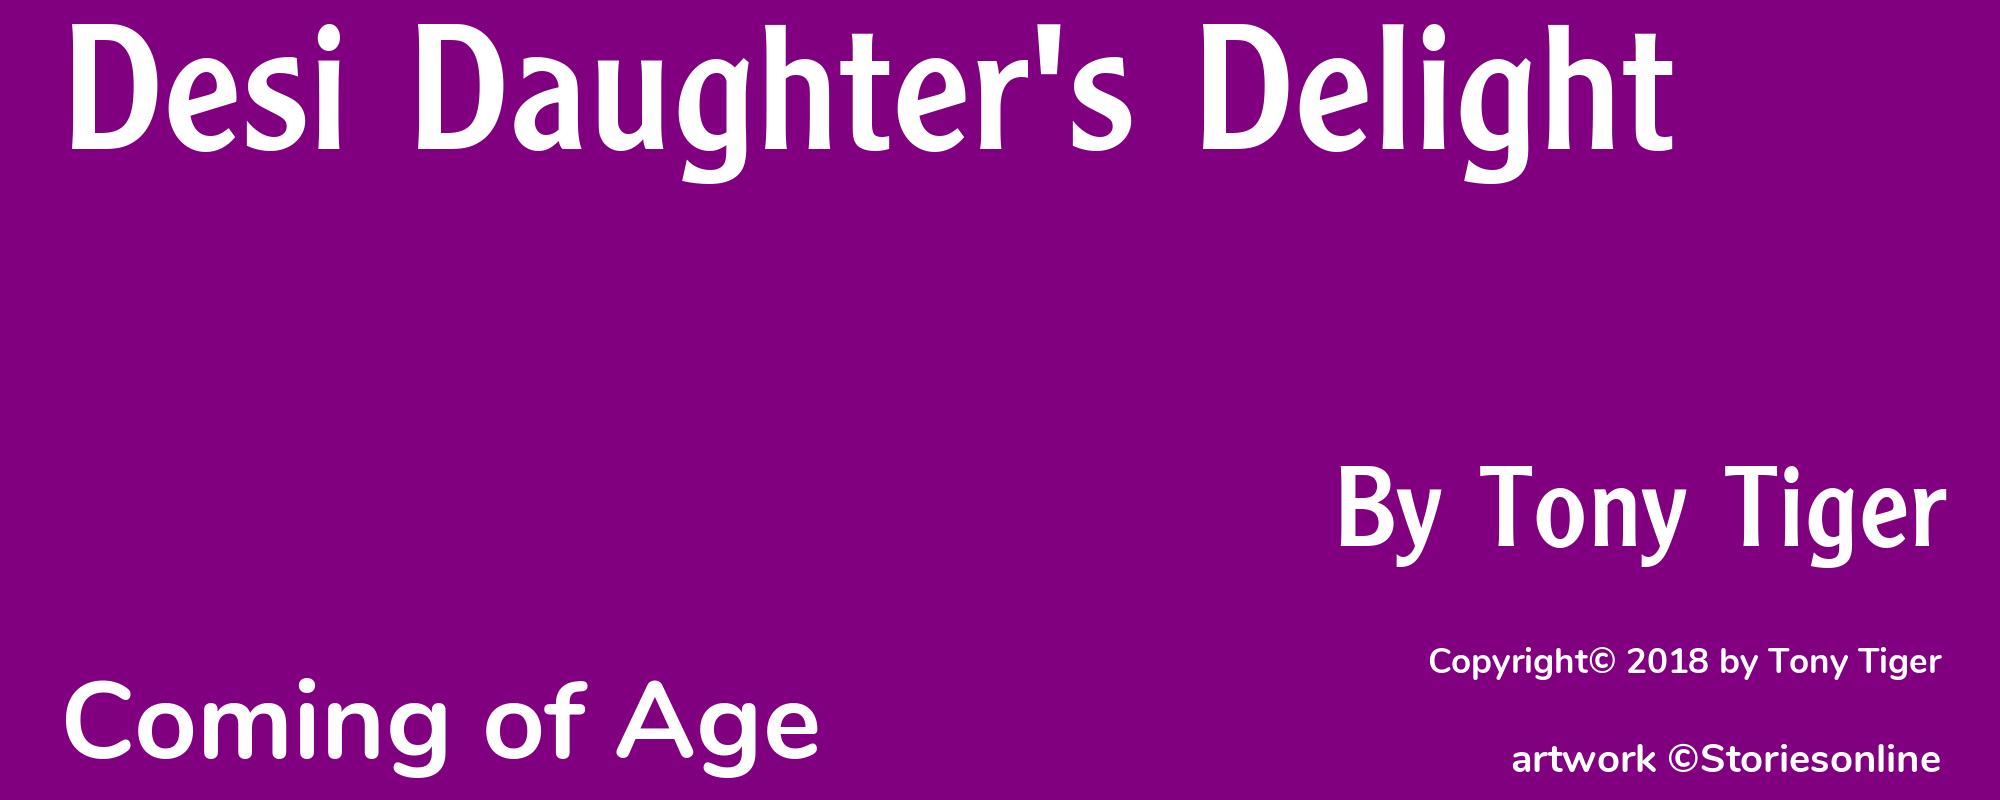 Desi Daughter's Delight - Cover